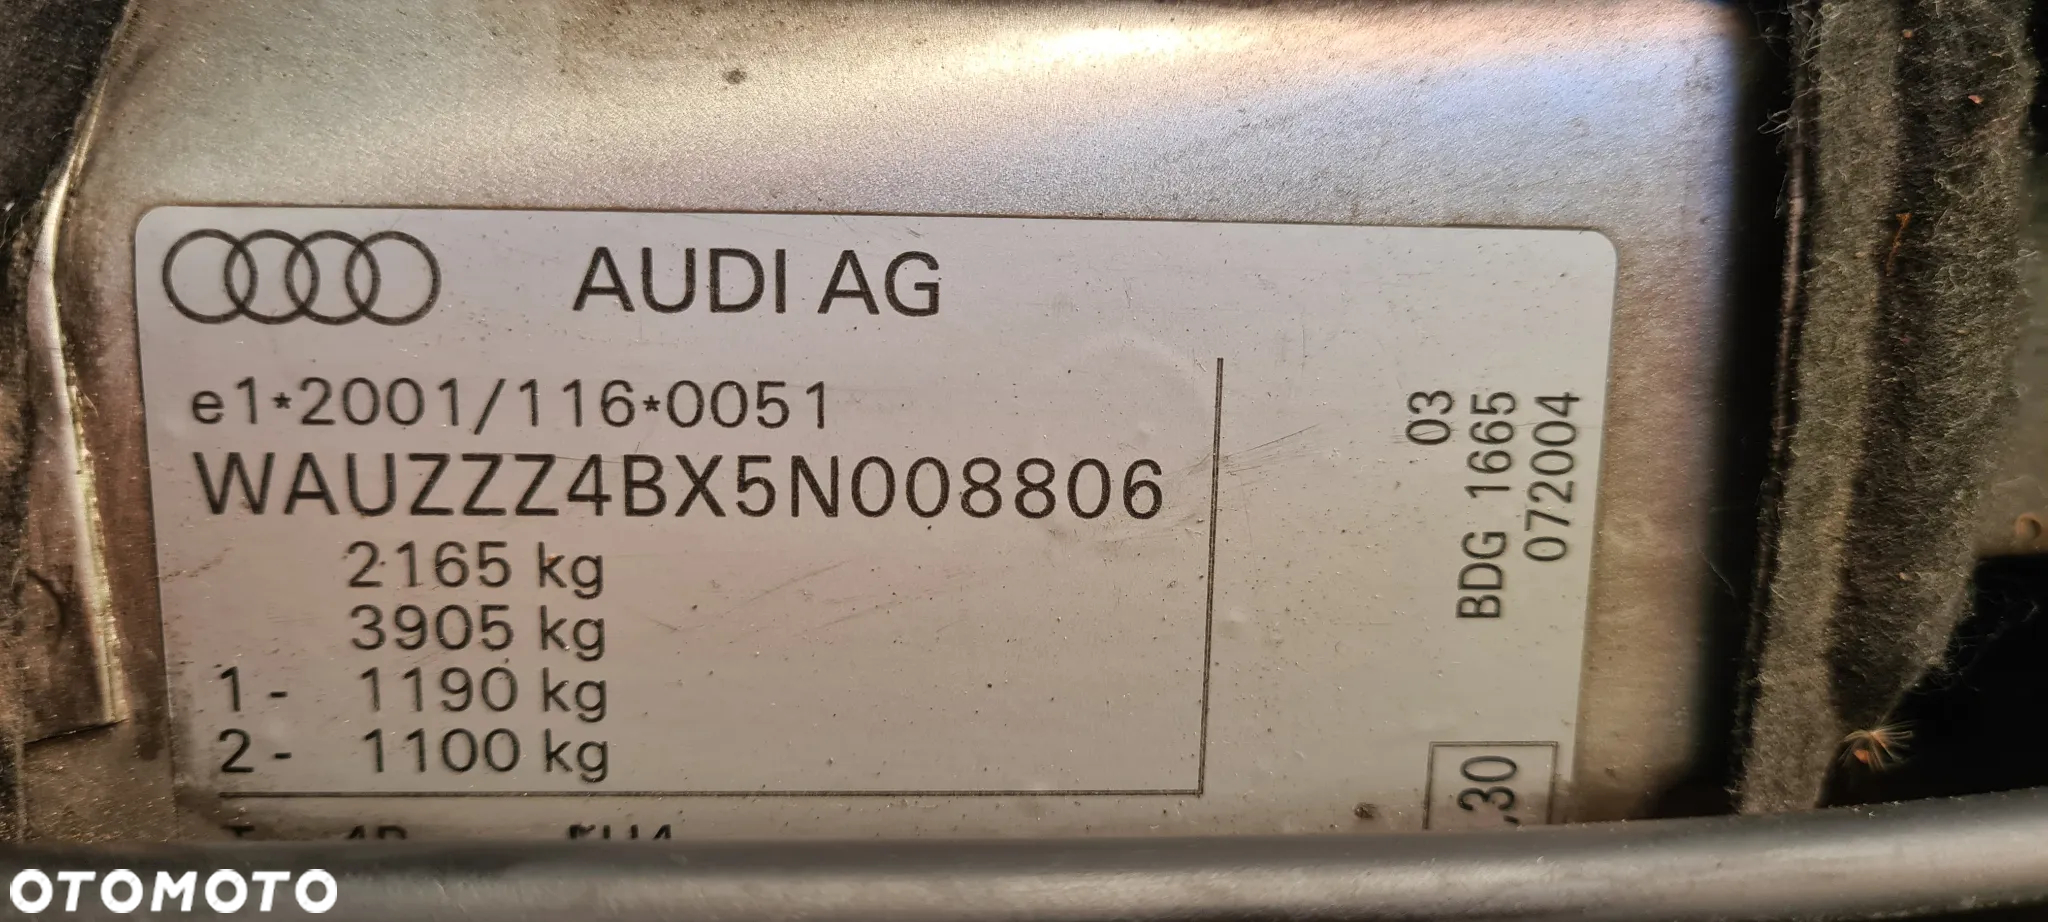 Audi A6 2.7 TDI - 9